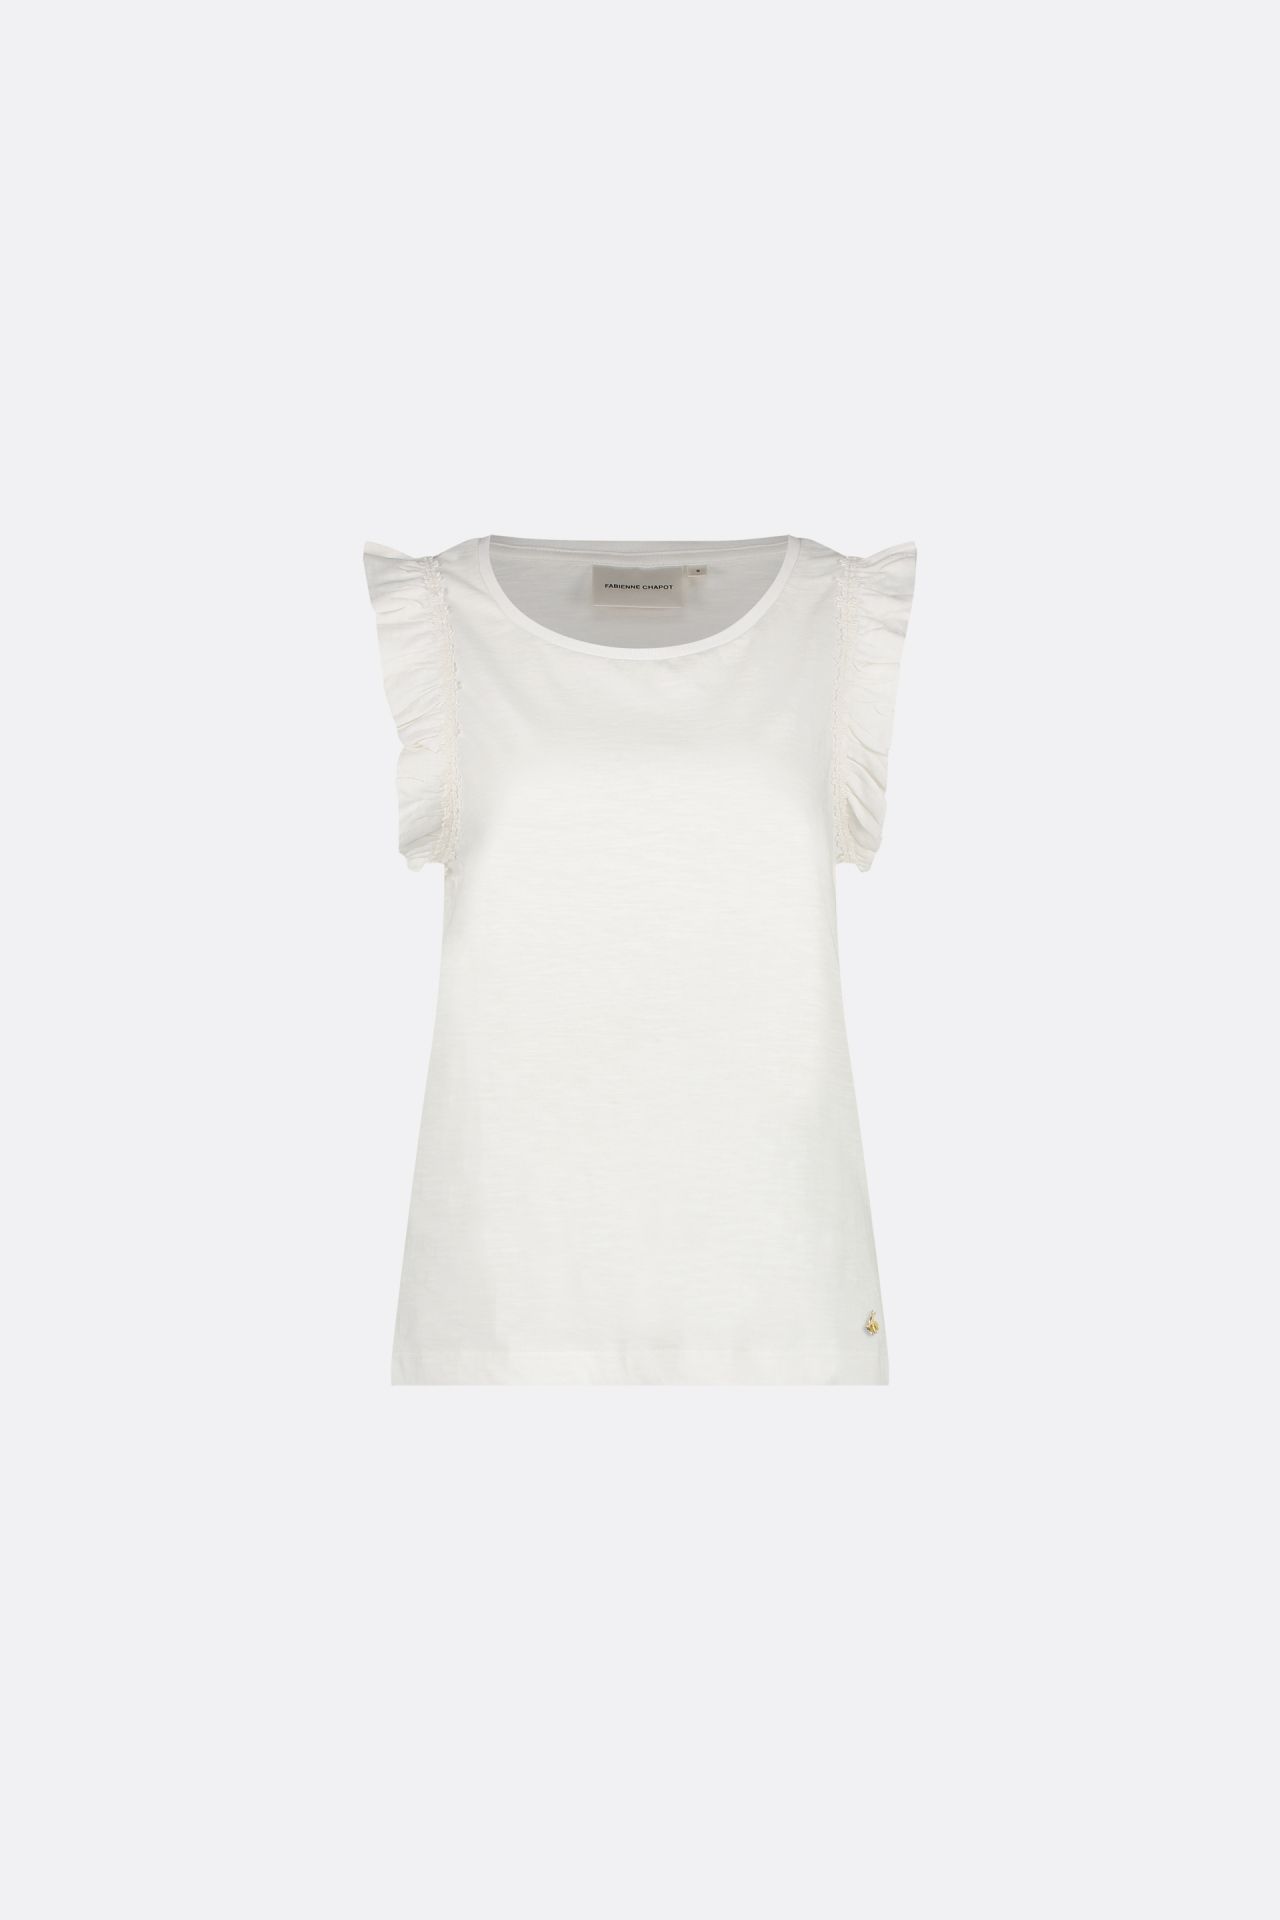 Fabienne Chapot Cream White Phil Frill T Shirt